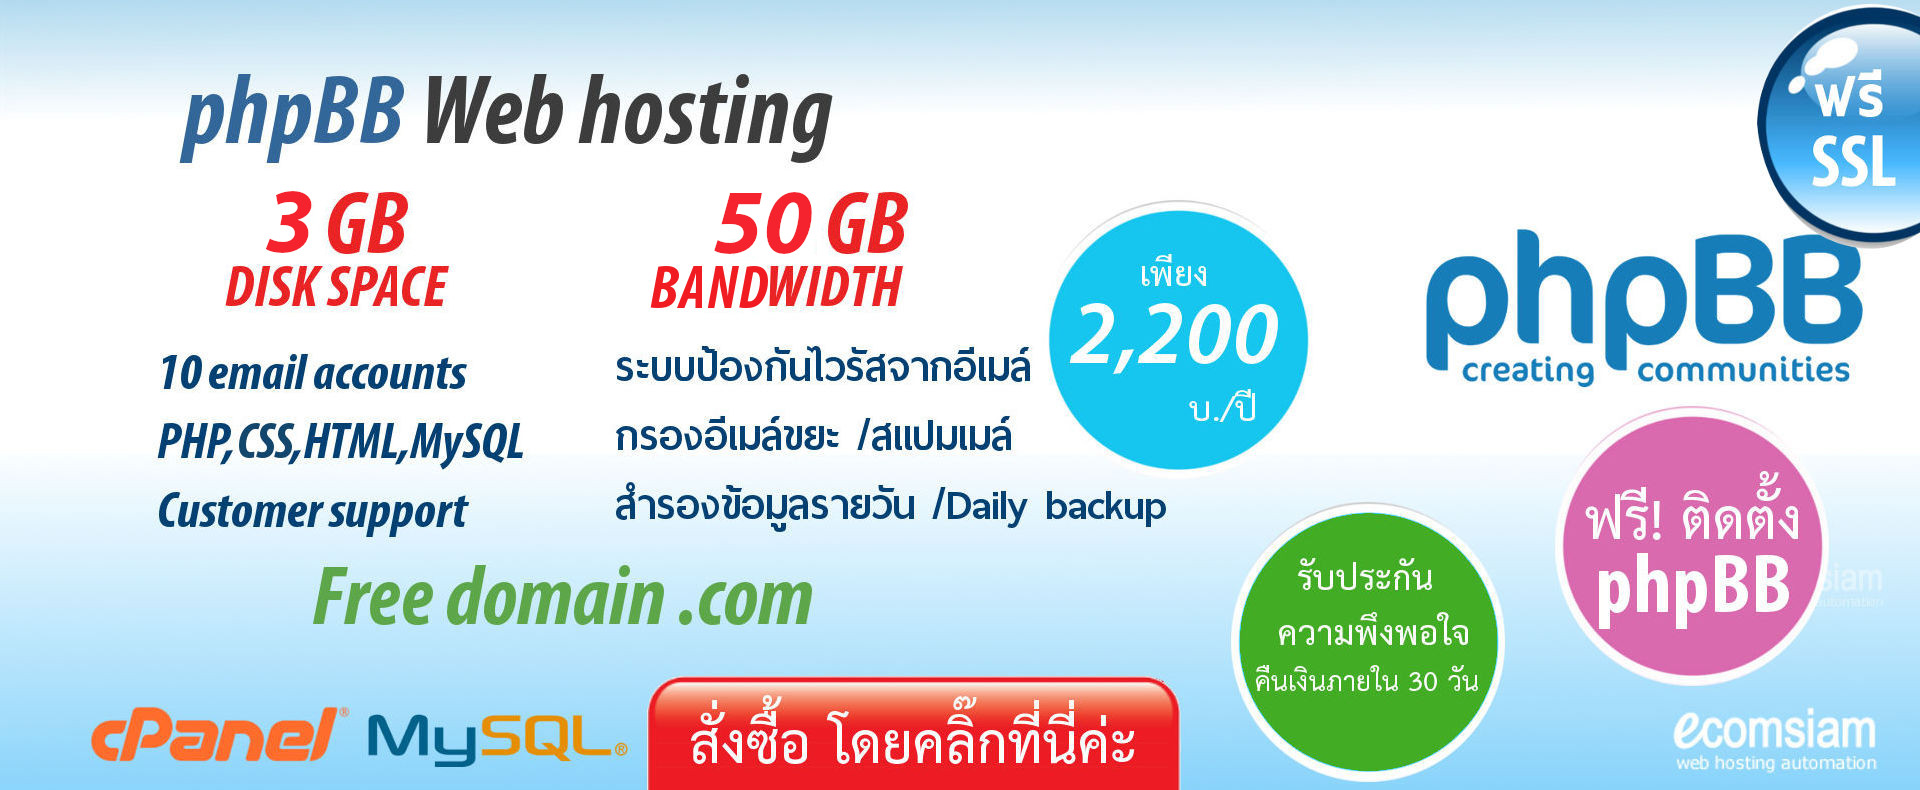 web hosting thai แนะนำ phpbb web hosting thailand เพียง 2,200 บ./ปี เว็บโฮสติ้งไทย ฟรี โดเมน ฟรี SSL ฟรีติดตั้ง แนะนำเว็บโฮสติ้ง บริการลูกค้า  Support ดูแลดี โดย webhostthai.com - phpbb web hosting thailand free domain